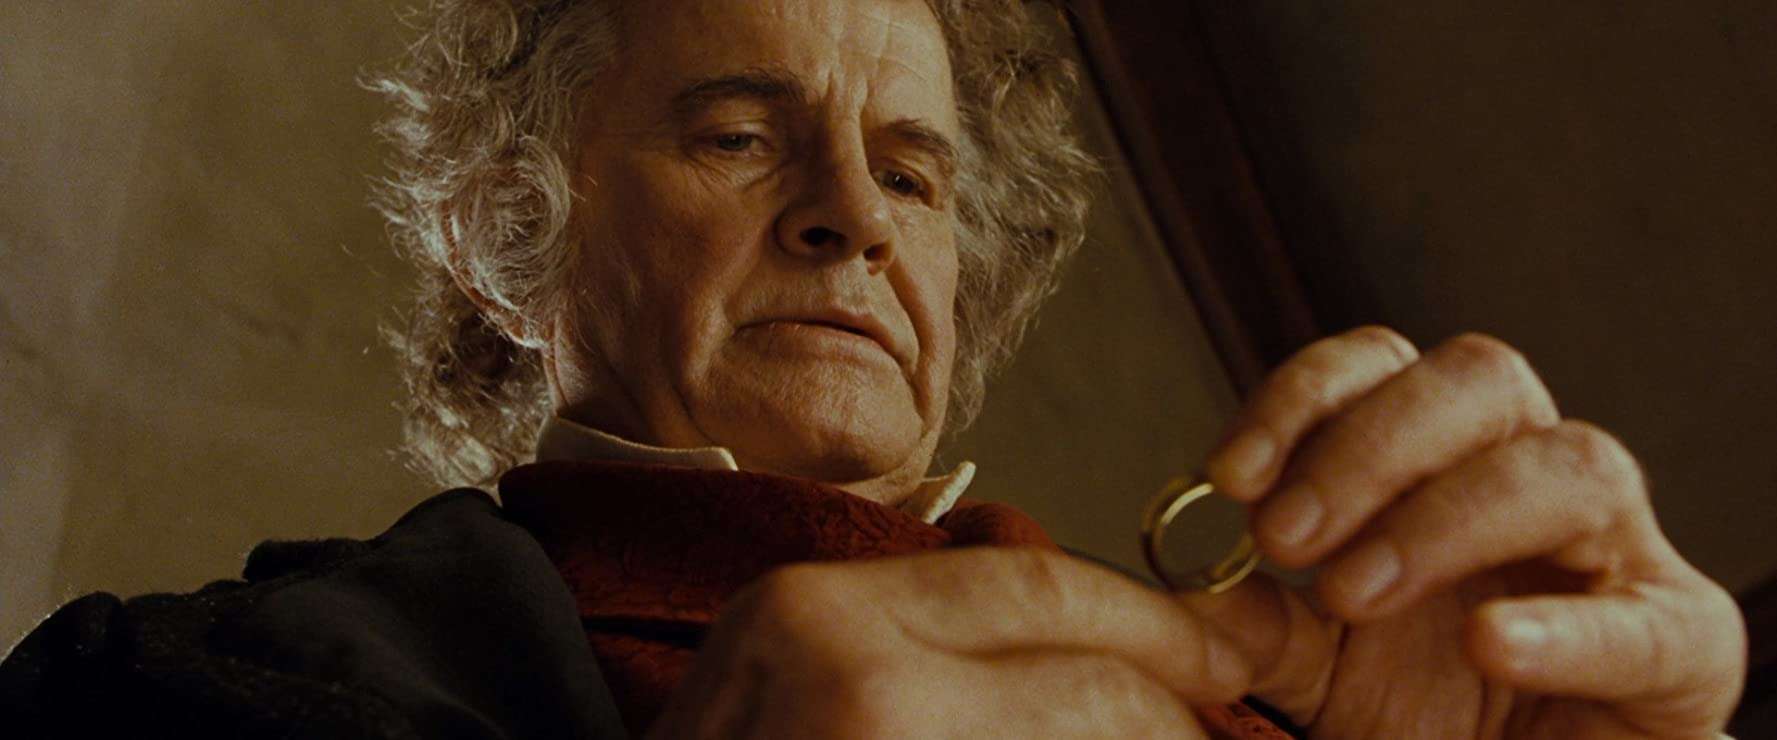 Vroeg diep verlies Ian Holm's Bilbo Baggins showed us the Lord of the Rings character's true  depth | SYFY WIRE